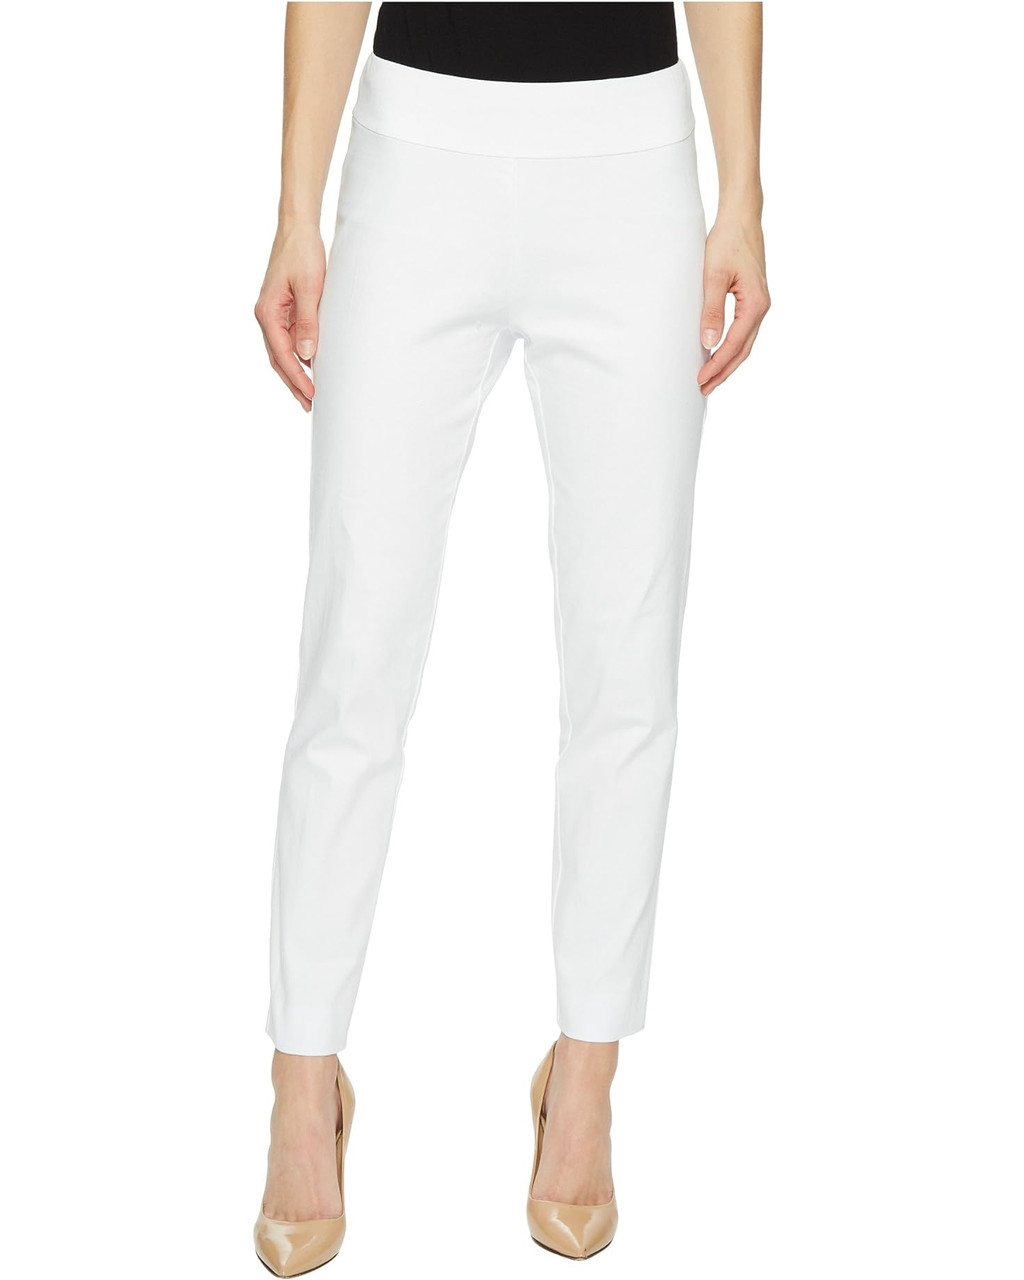 Skinny Regular Ankle Jeans - White denim - Ladies | H&M US